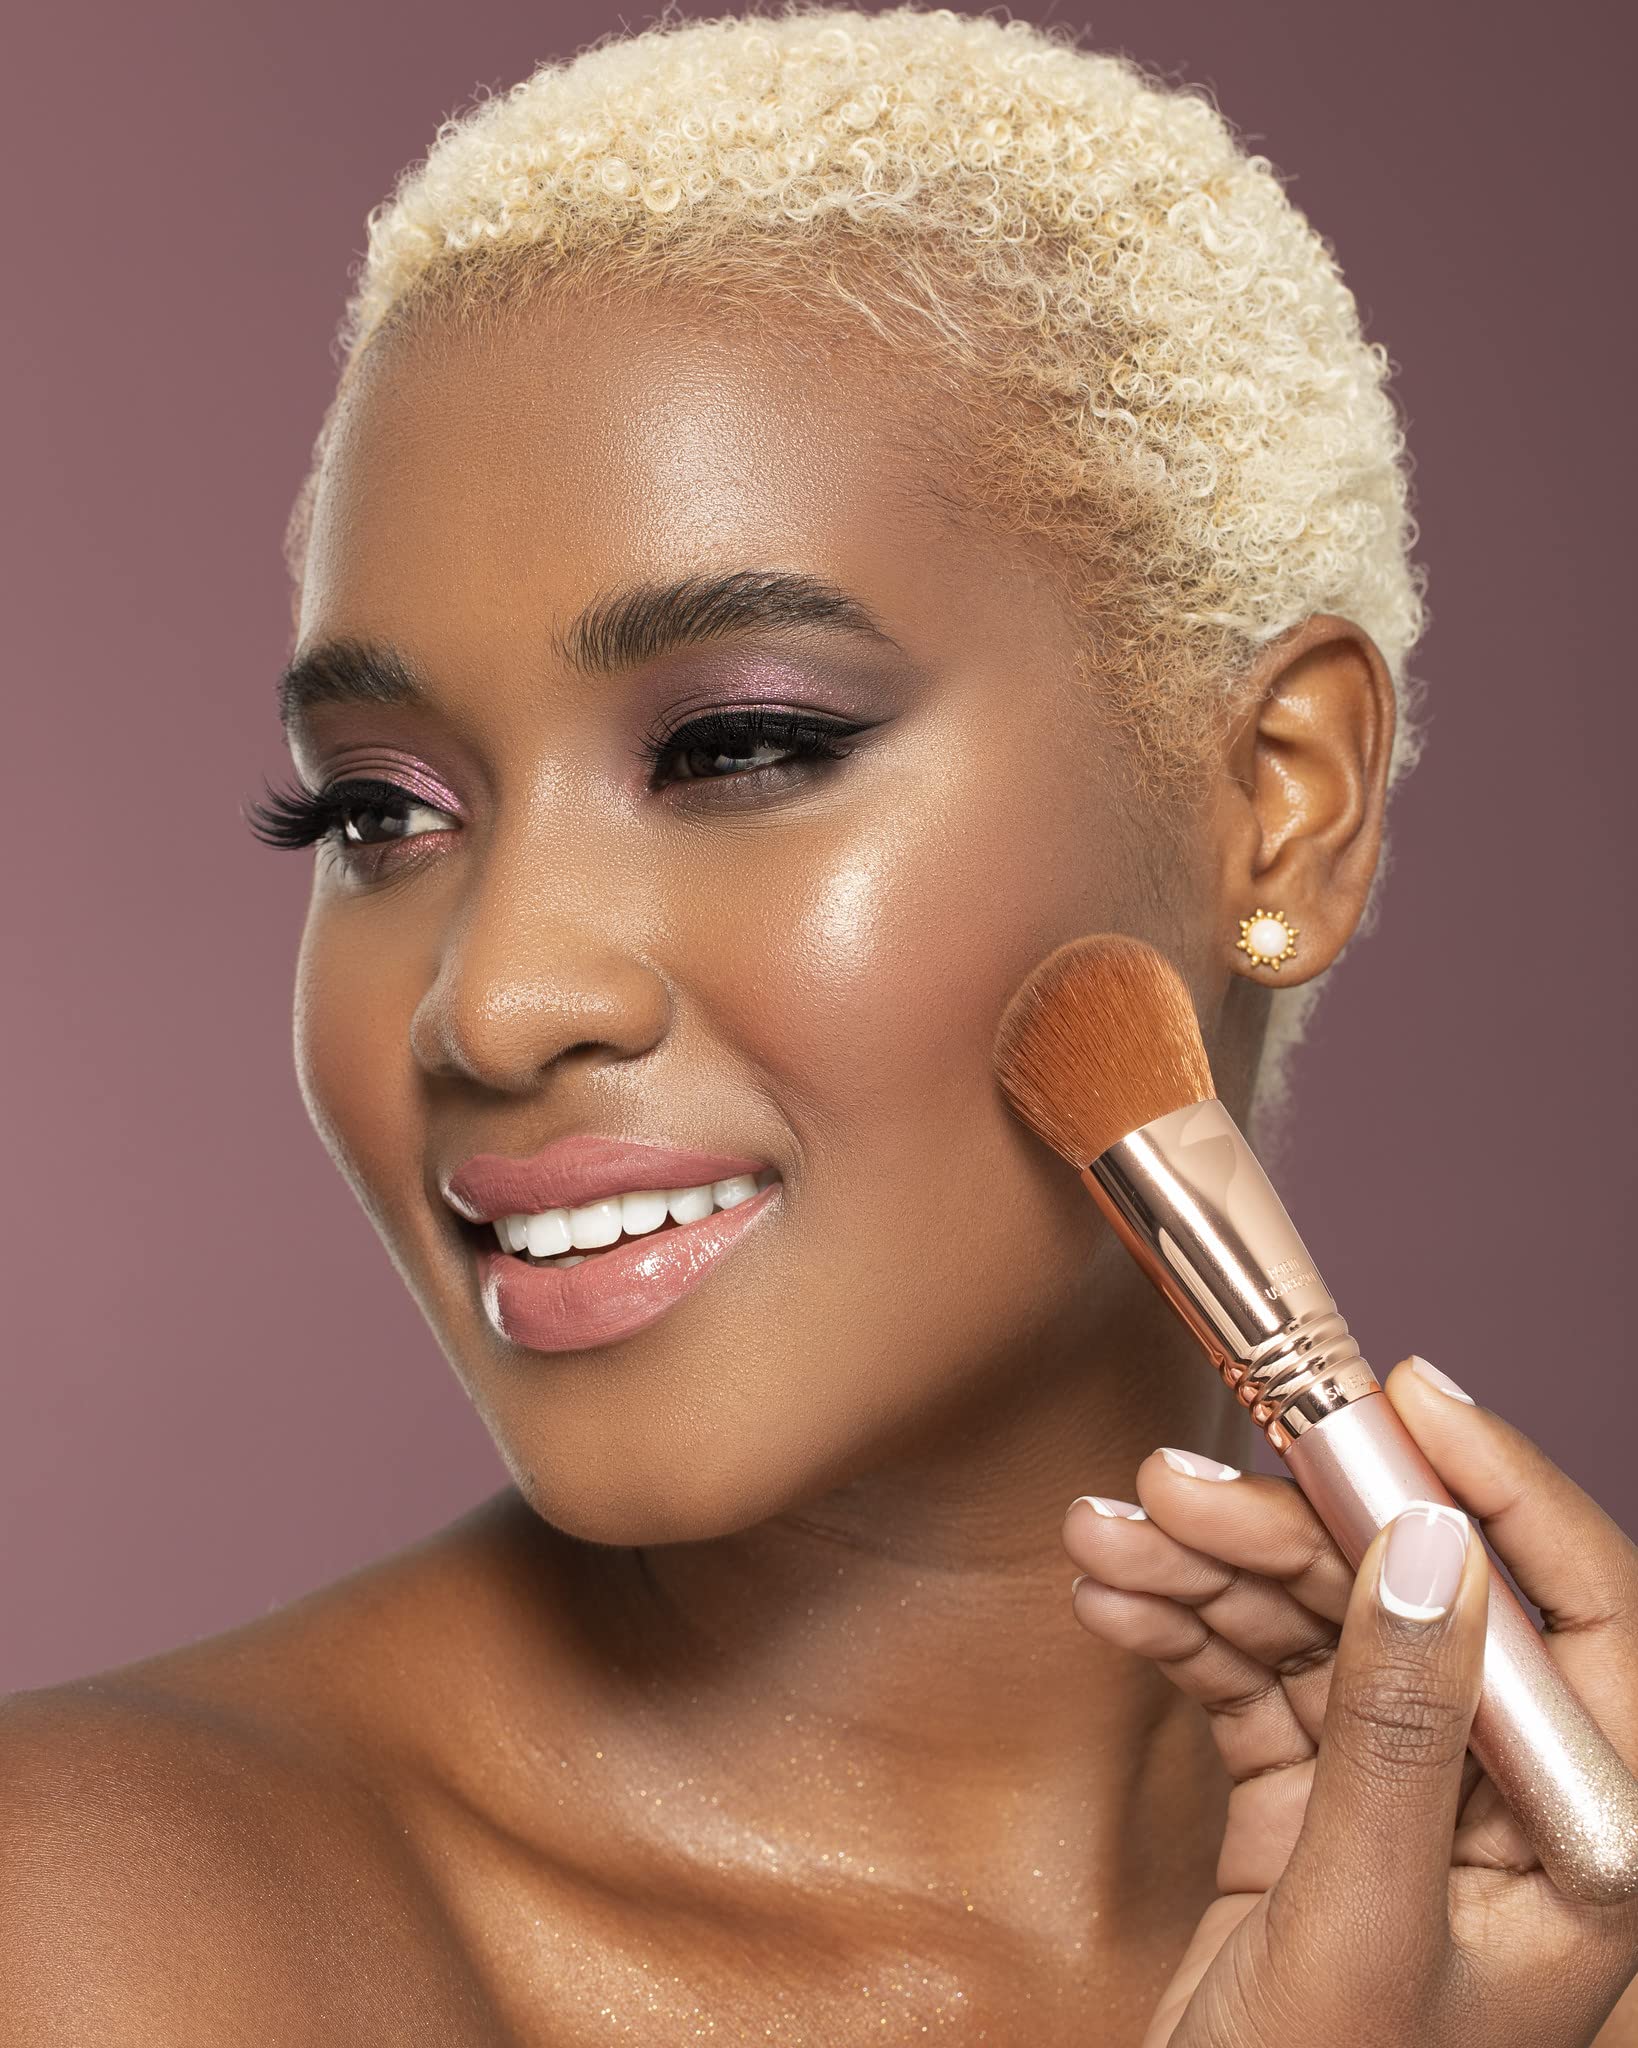 Sigma Beauty F47 Multitasker Makeup Brush